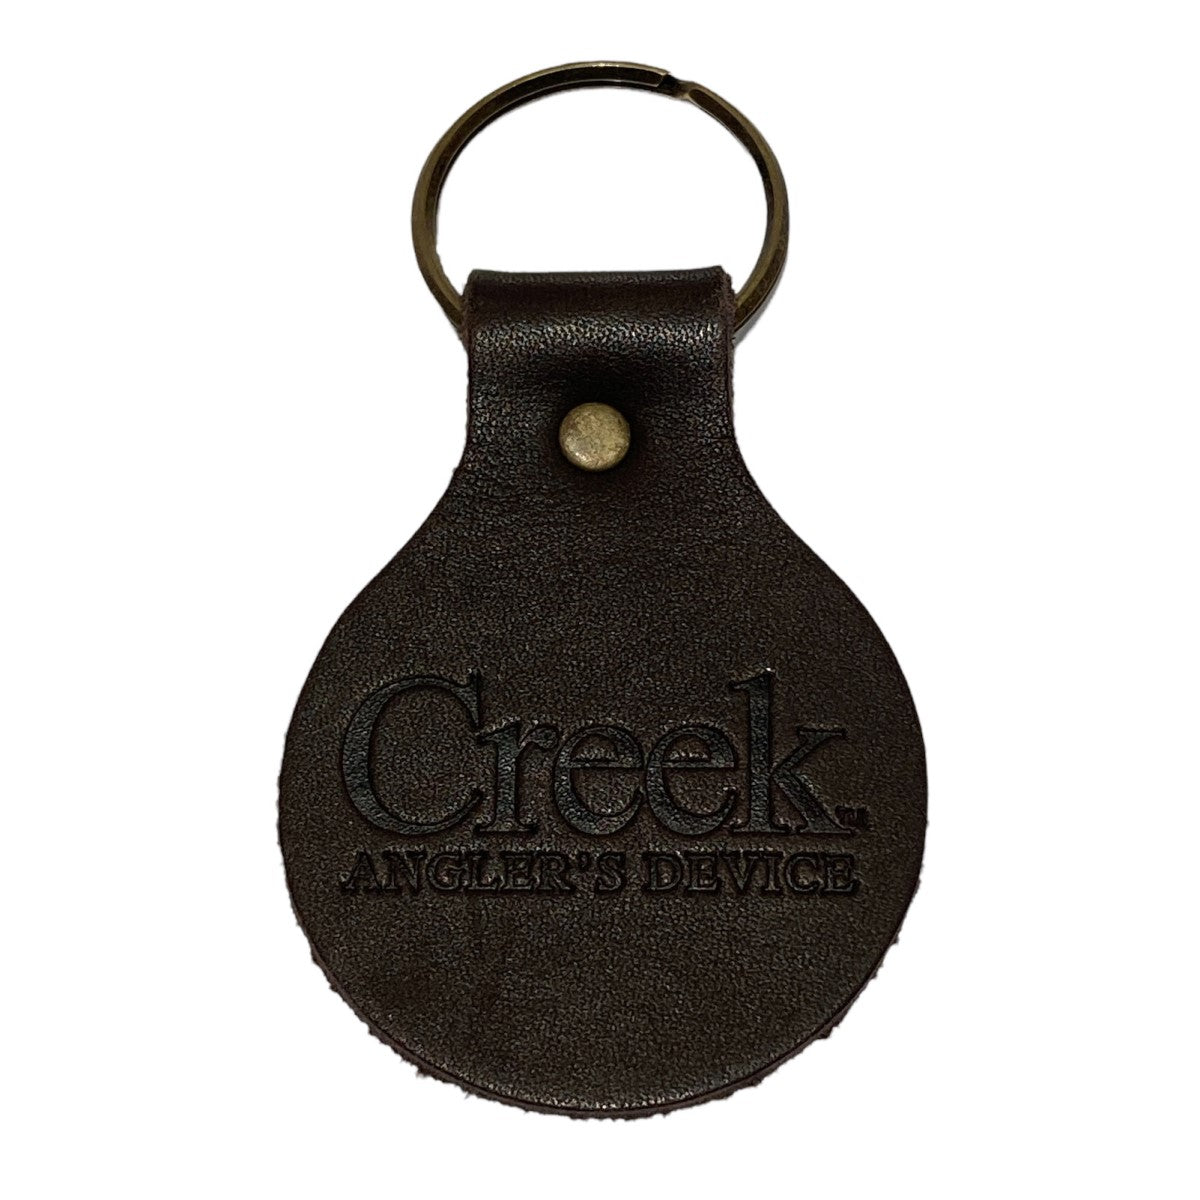 Creek Angler's Device(クリークアングラーズデバイス) Leather Key 